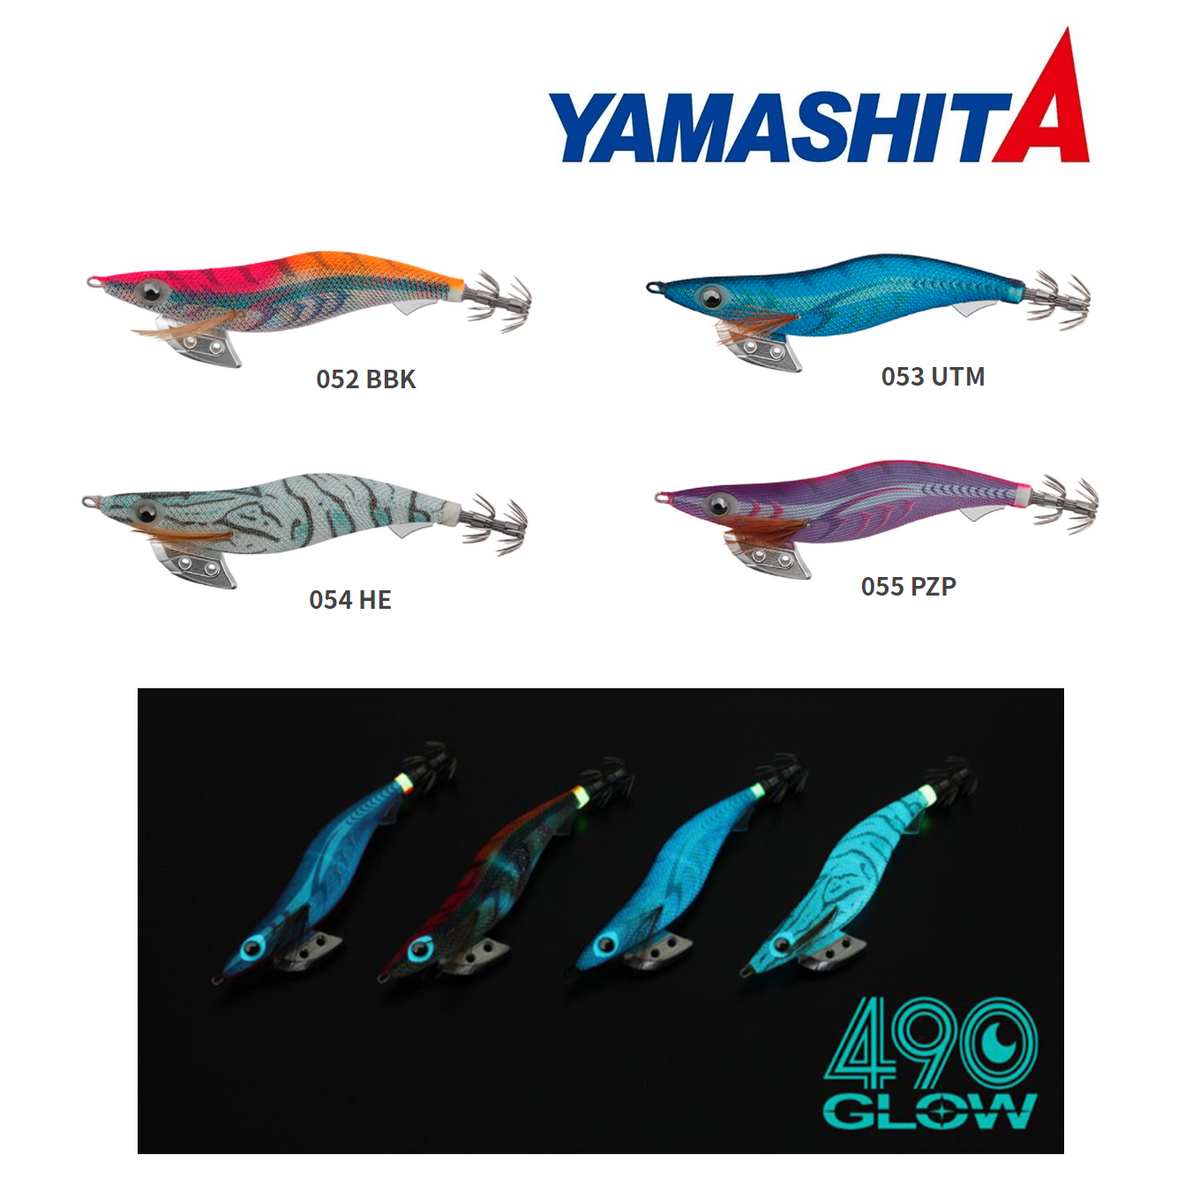 Yamashita Egi-Oh K 490GLOW Squid Jig Size #3.0